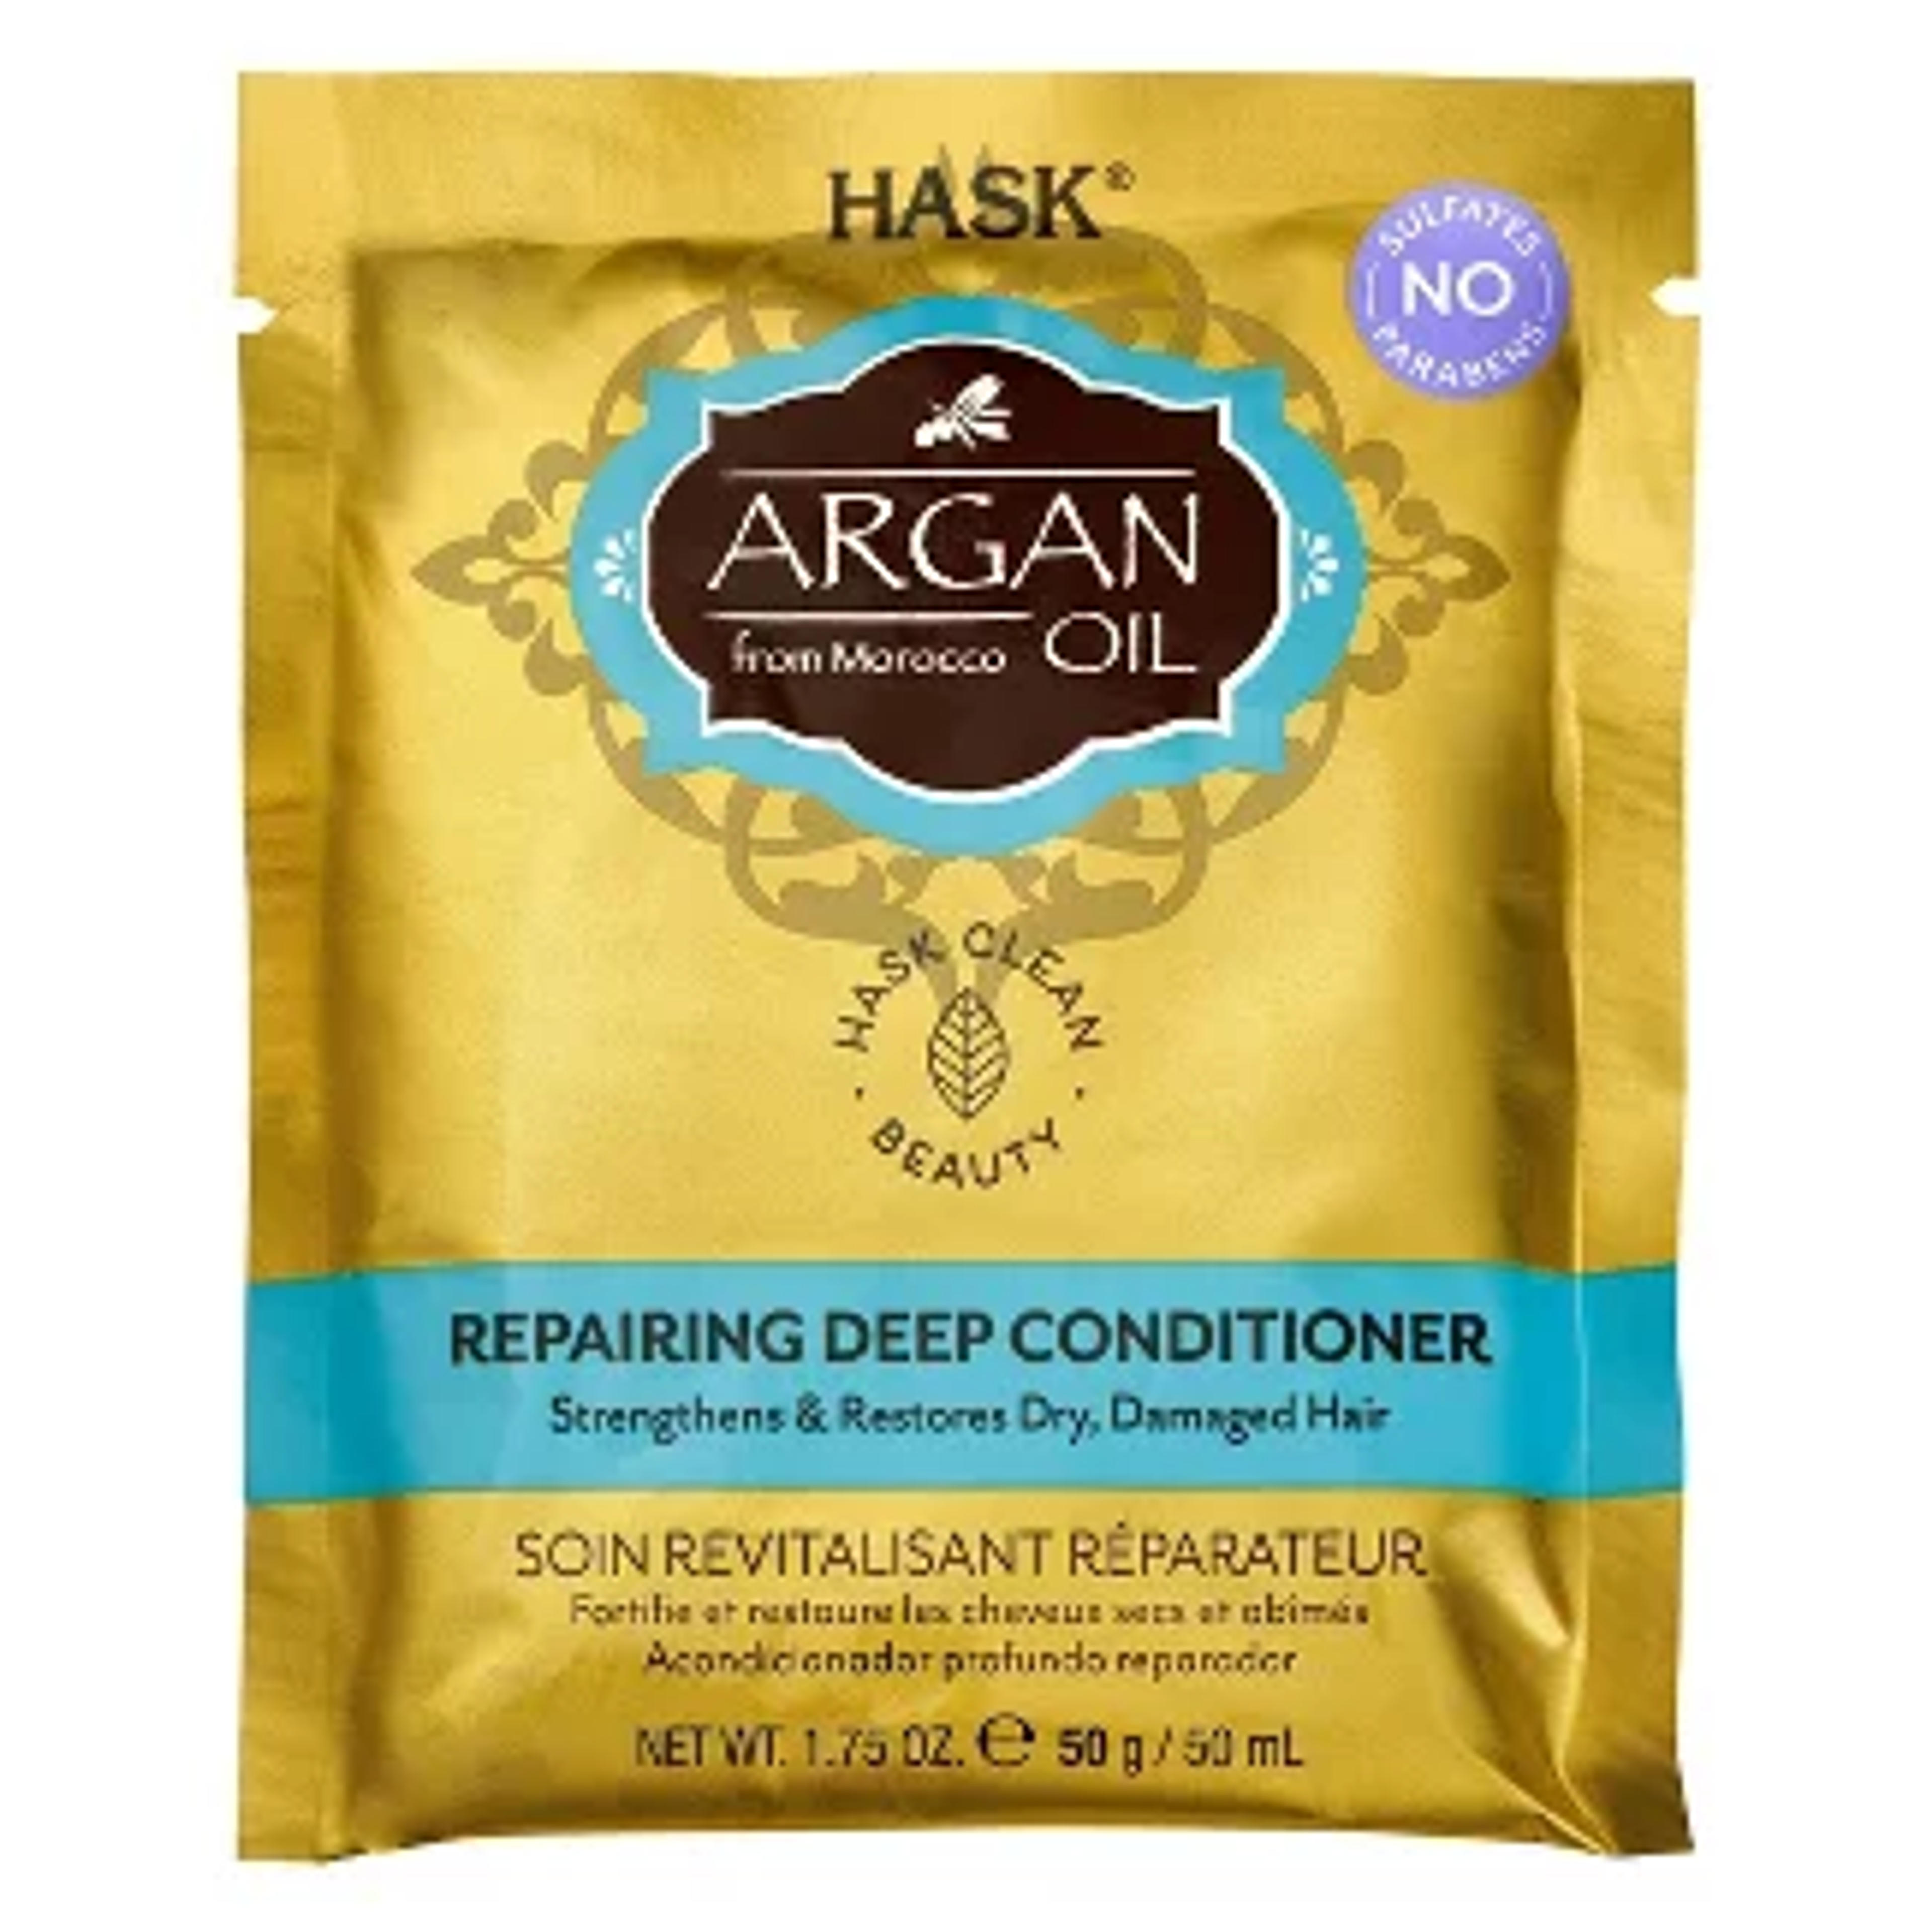 Hask Argan Oil Repairing Deep Conditioner - 1.75 Fl Oz : Target